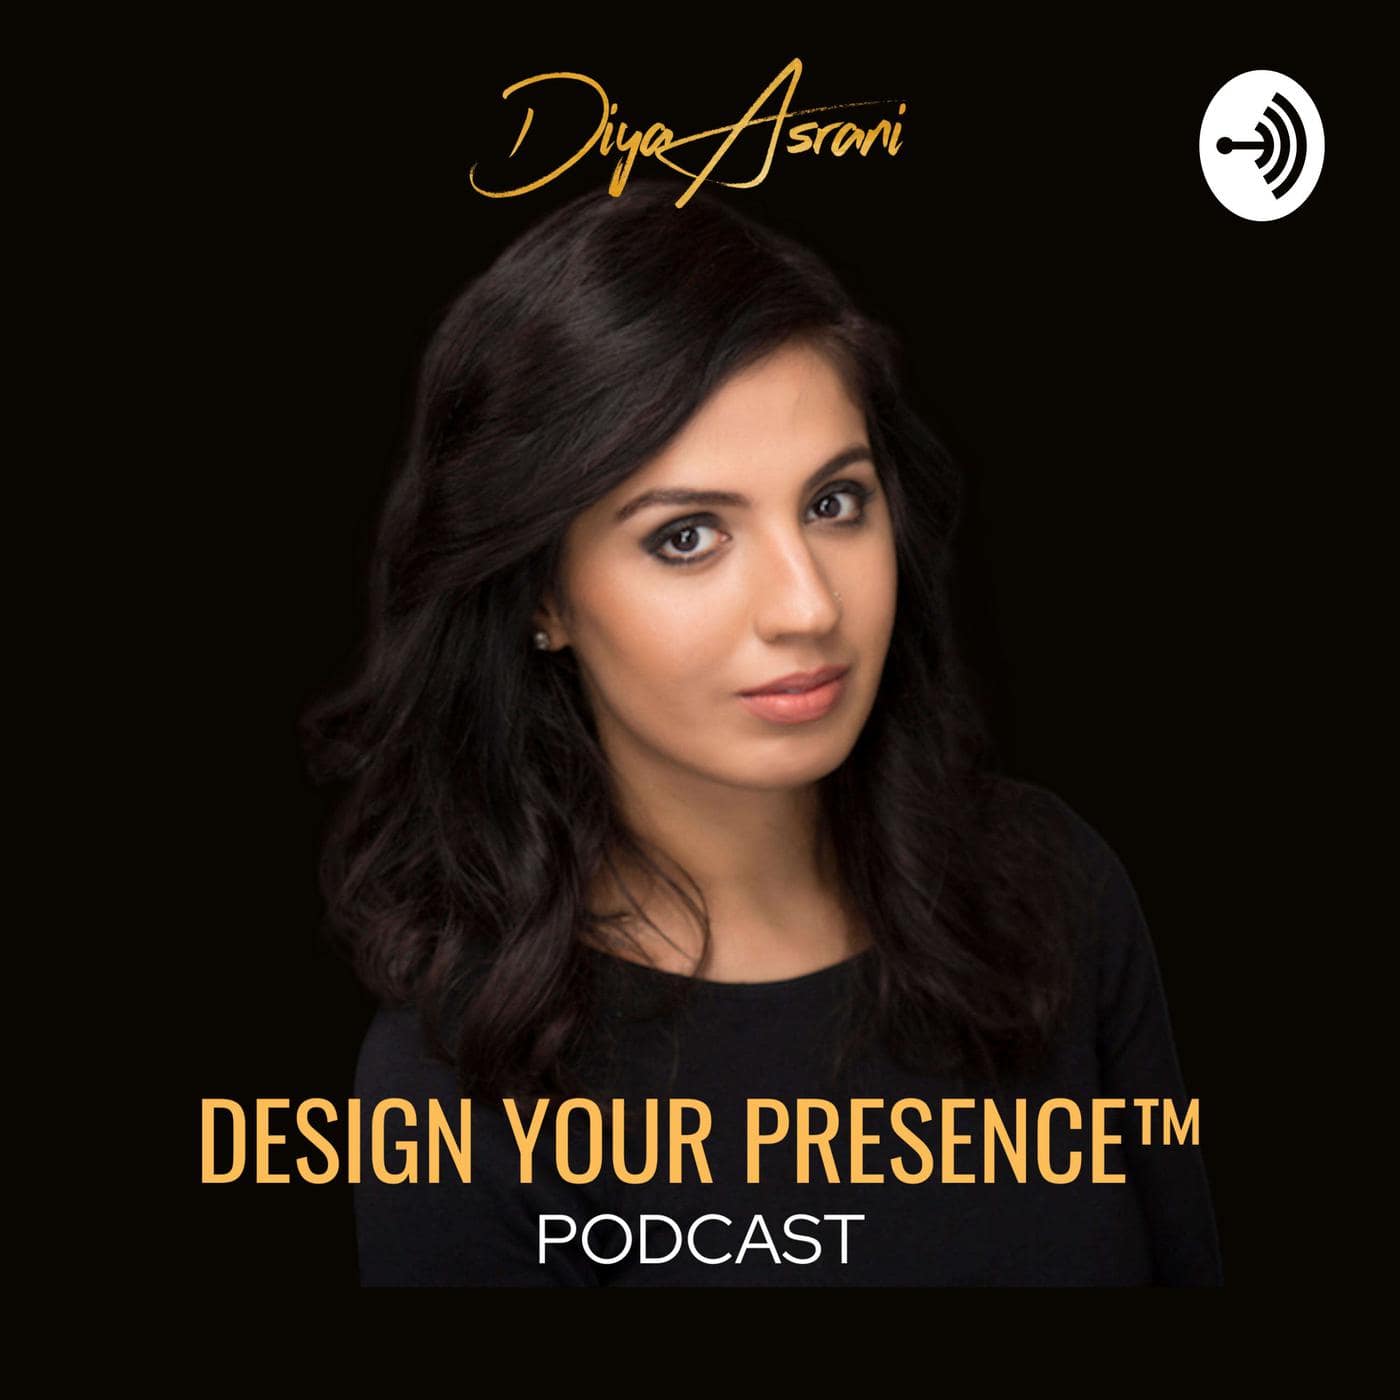 Design your presence podcast with Diya Asrani